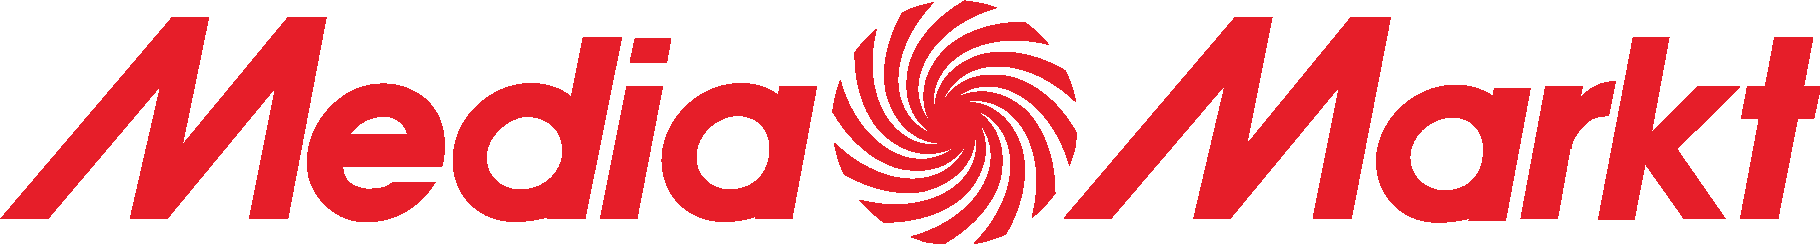 Media Markt Vector Logo - Download Free SVG Icon